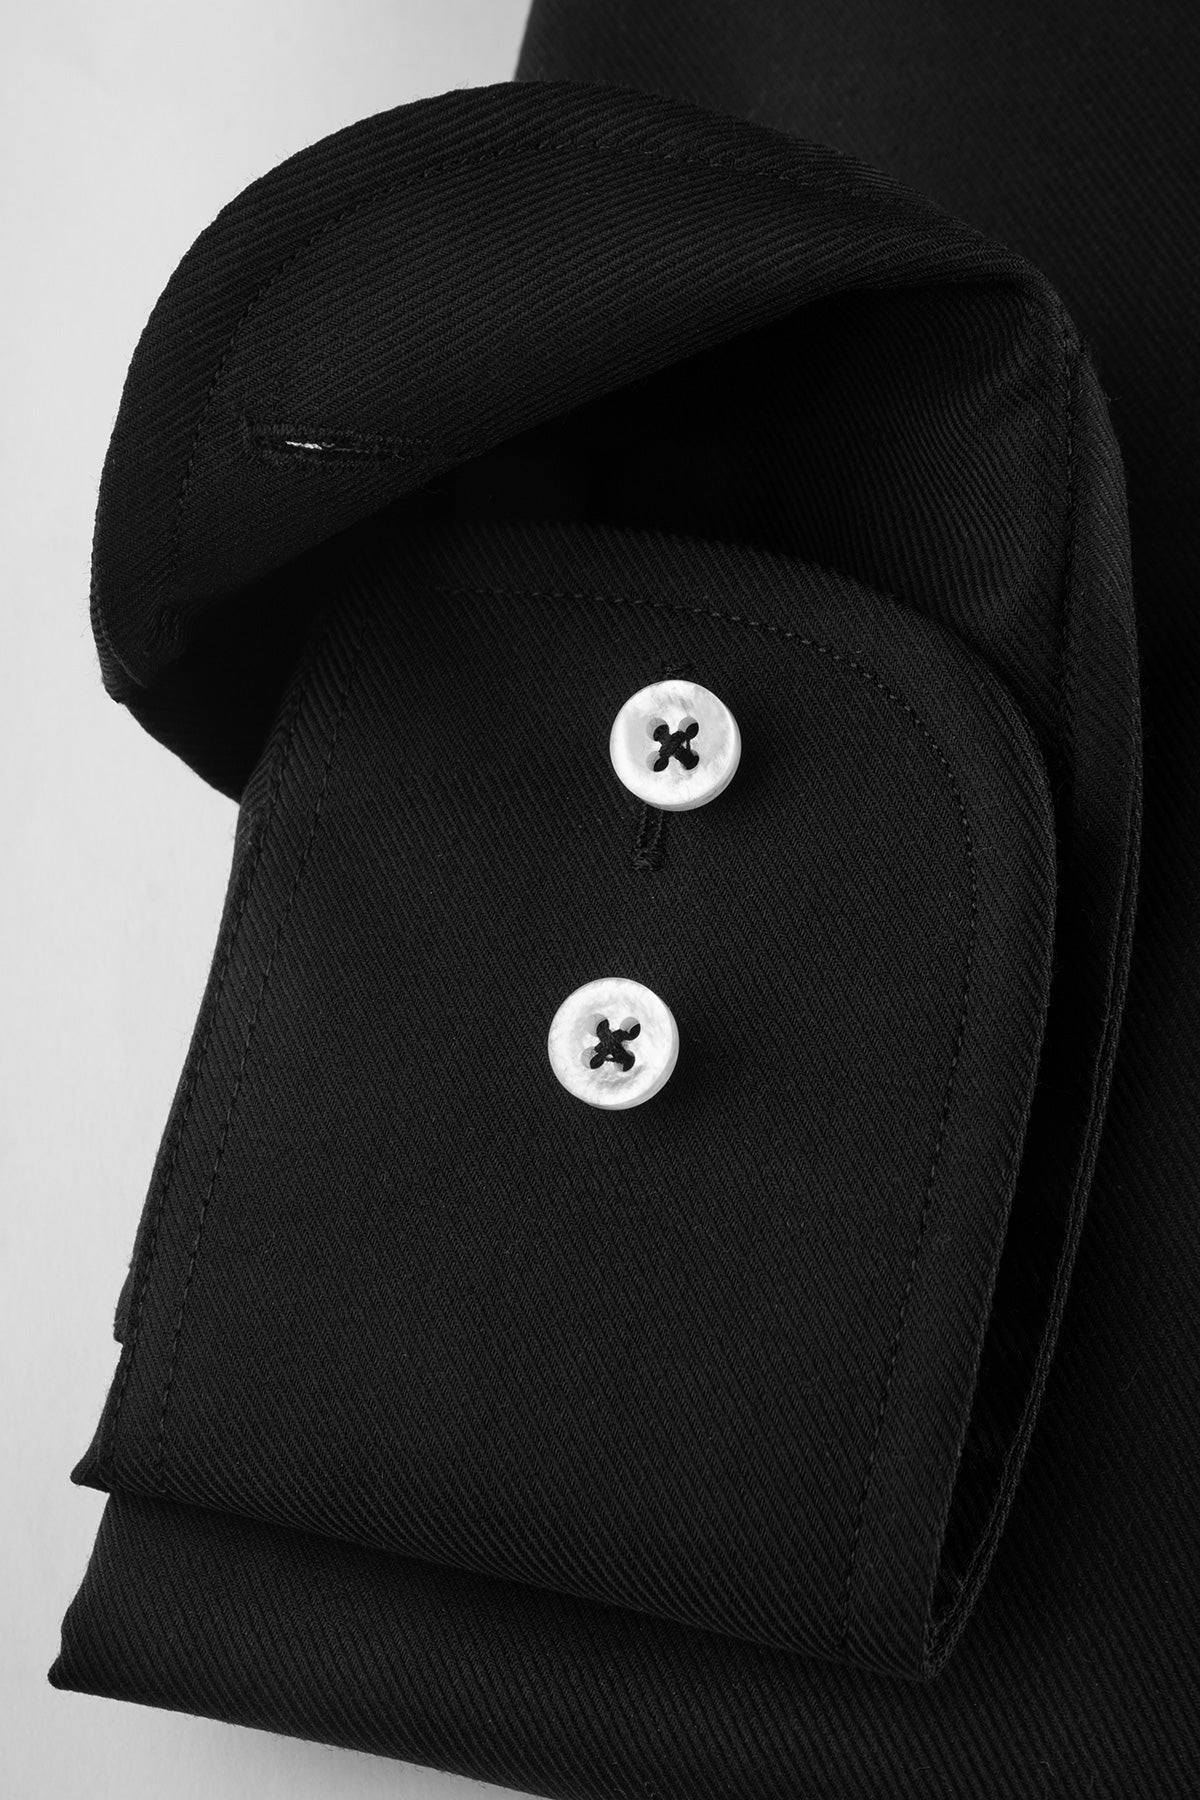 Black merino wool regular fit shirt